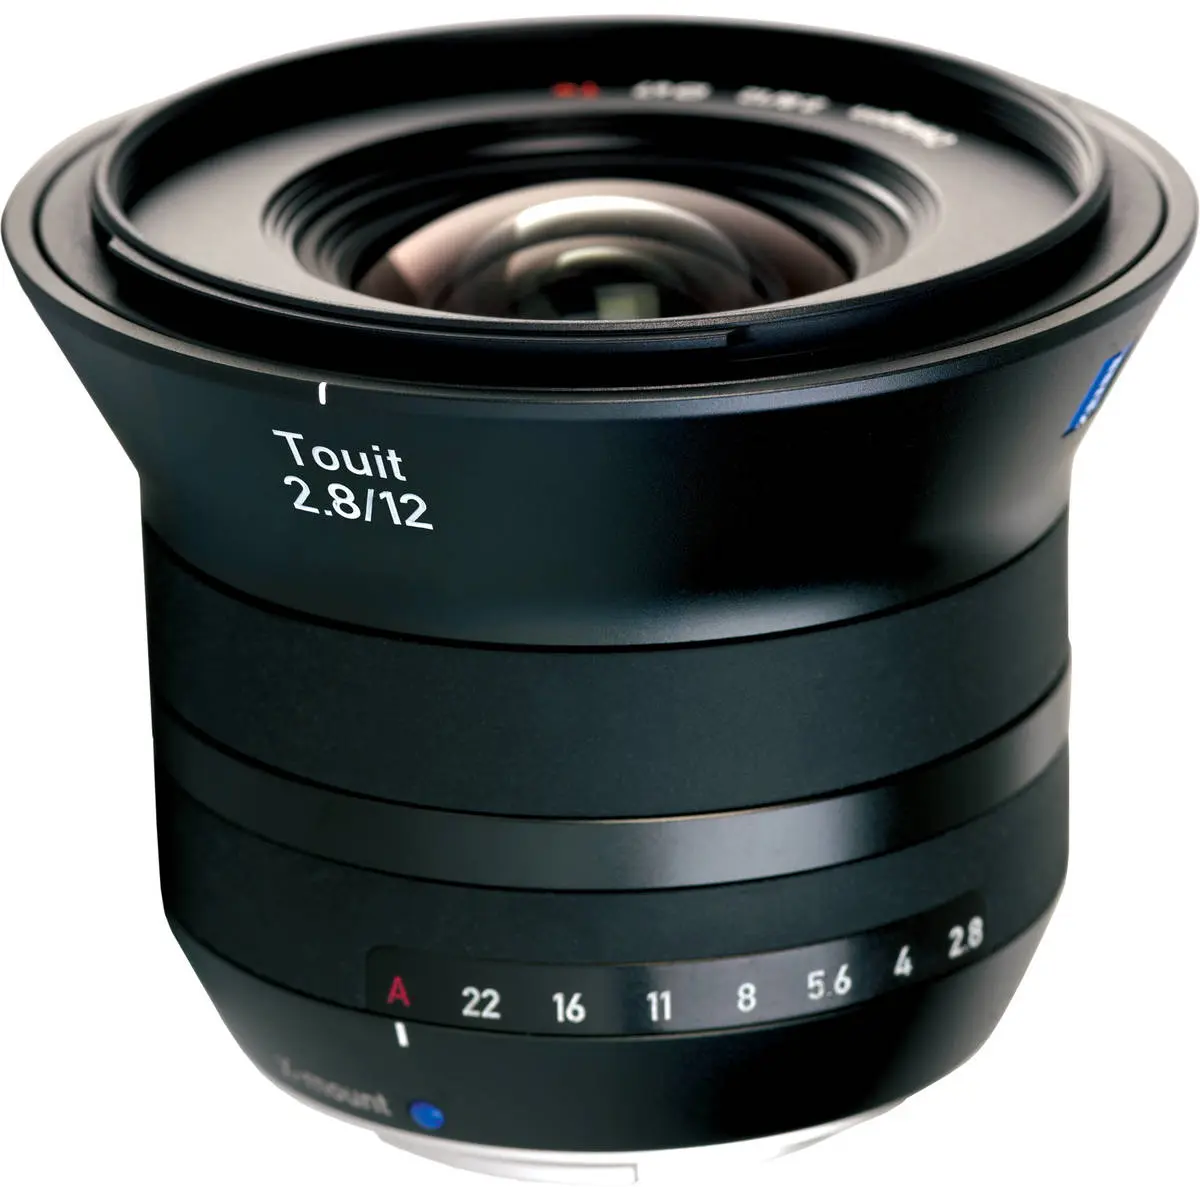 Carl Zeiss Touit 2.8/12 Distagon T* (Sony E) Lens